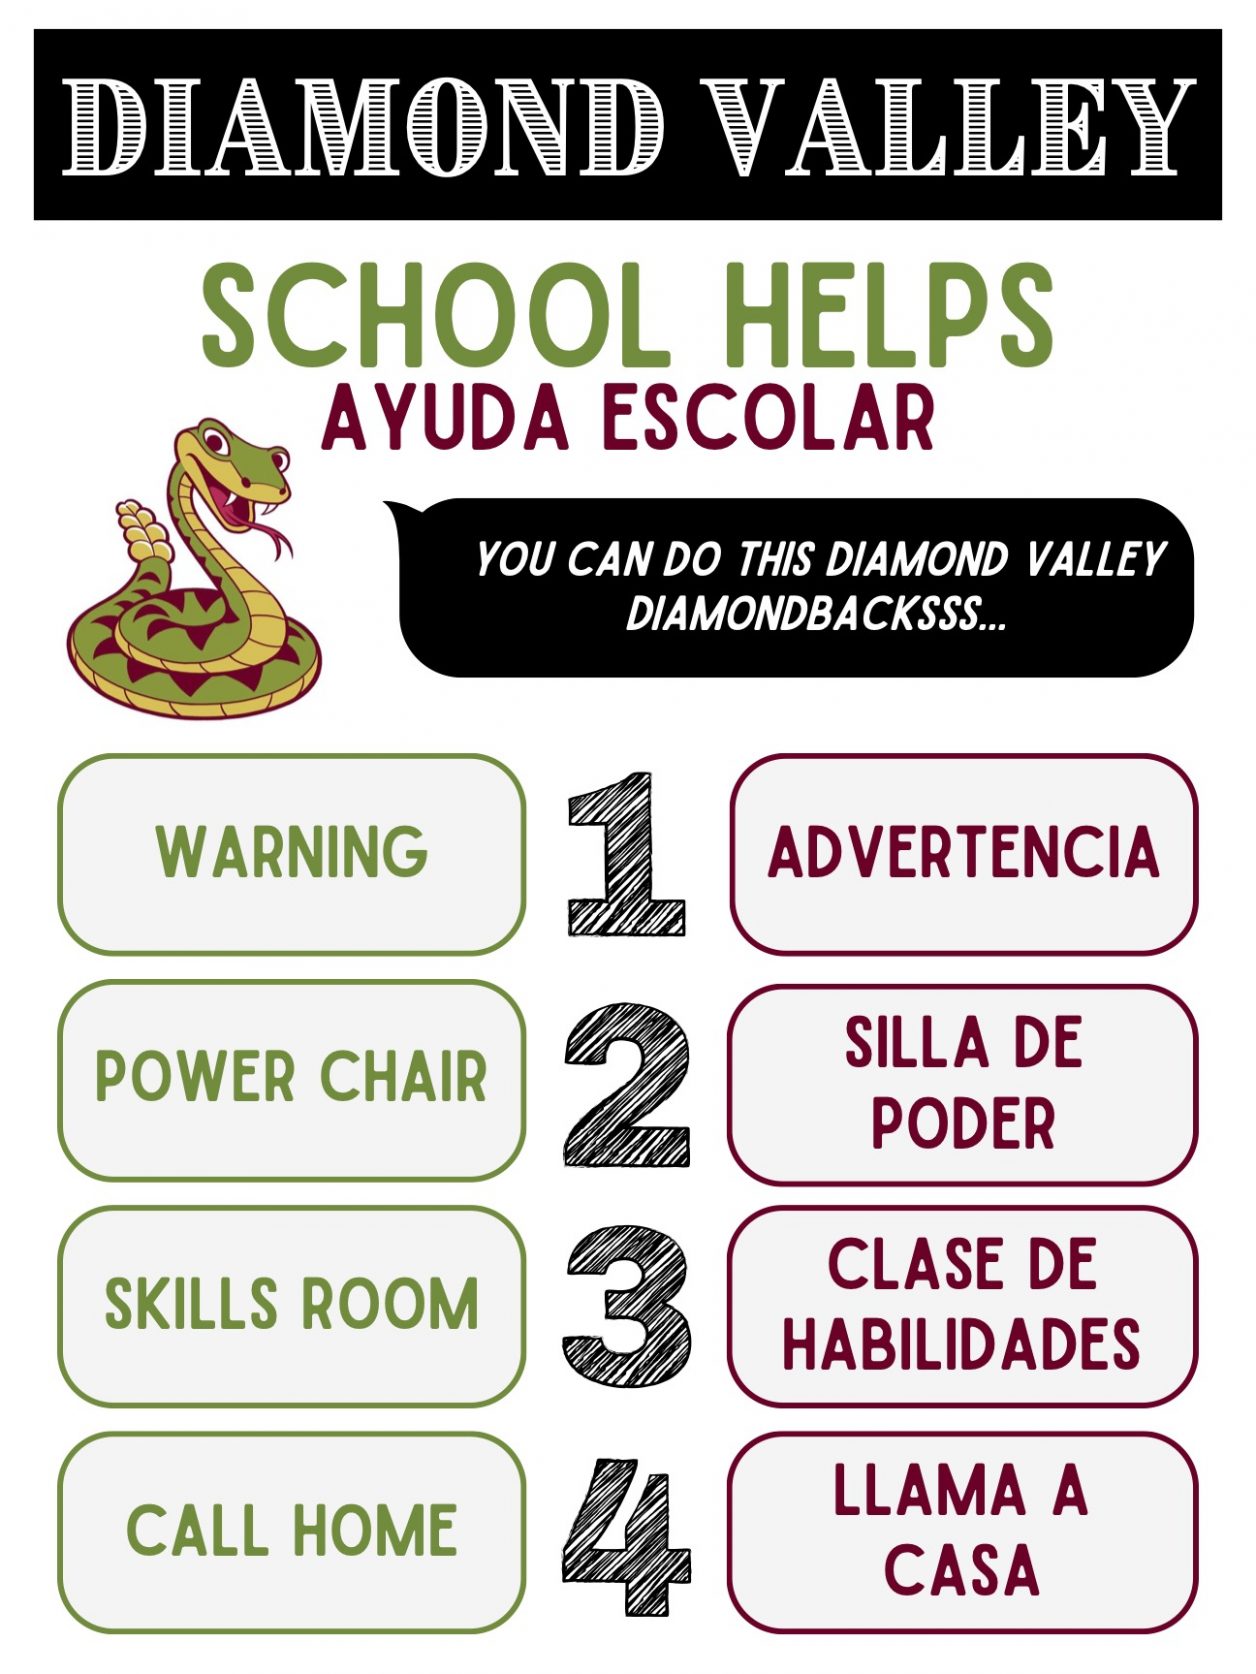 Diamond Valley School Helps / Ayuda Escolar

1. Warning / advertencia
2. Power Chair / Silla de poder
3. Skills Room / Clase de habilidades
4. Call home / Llama a casa